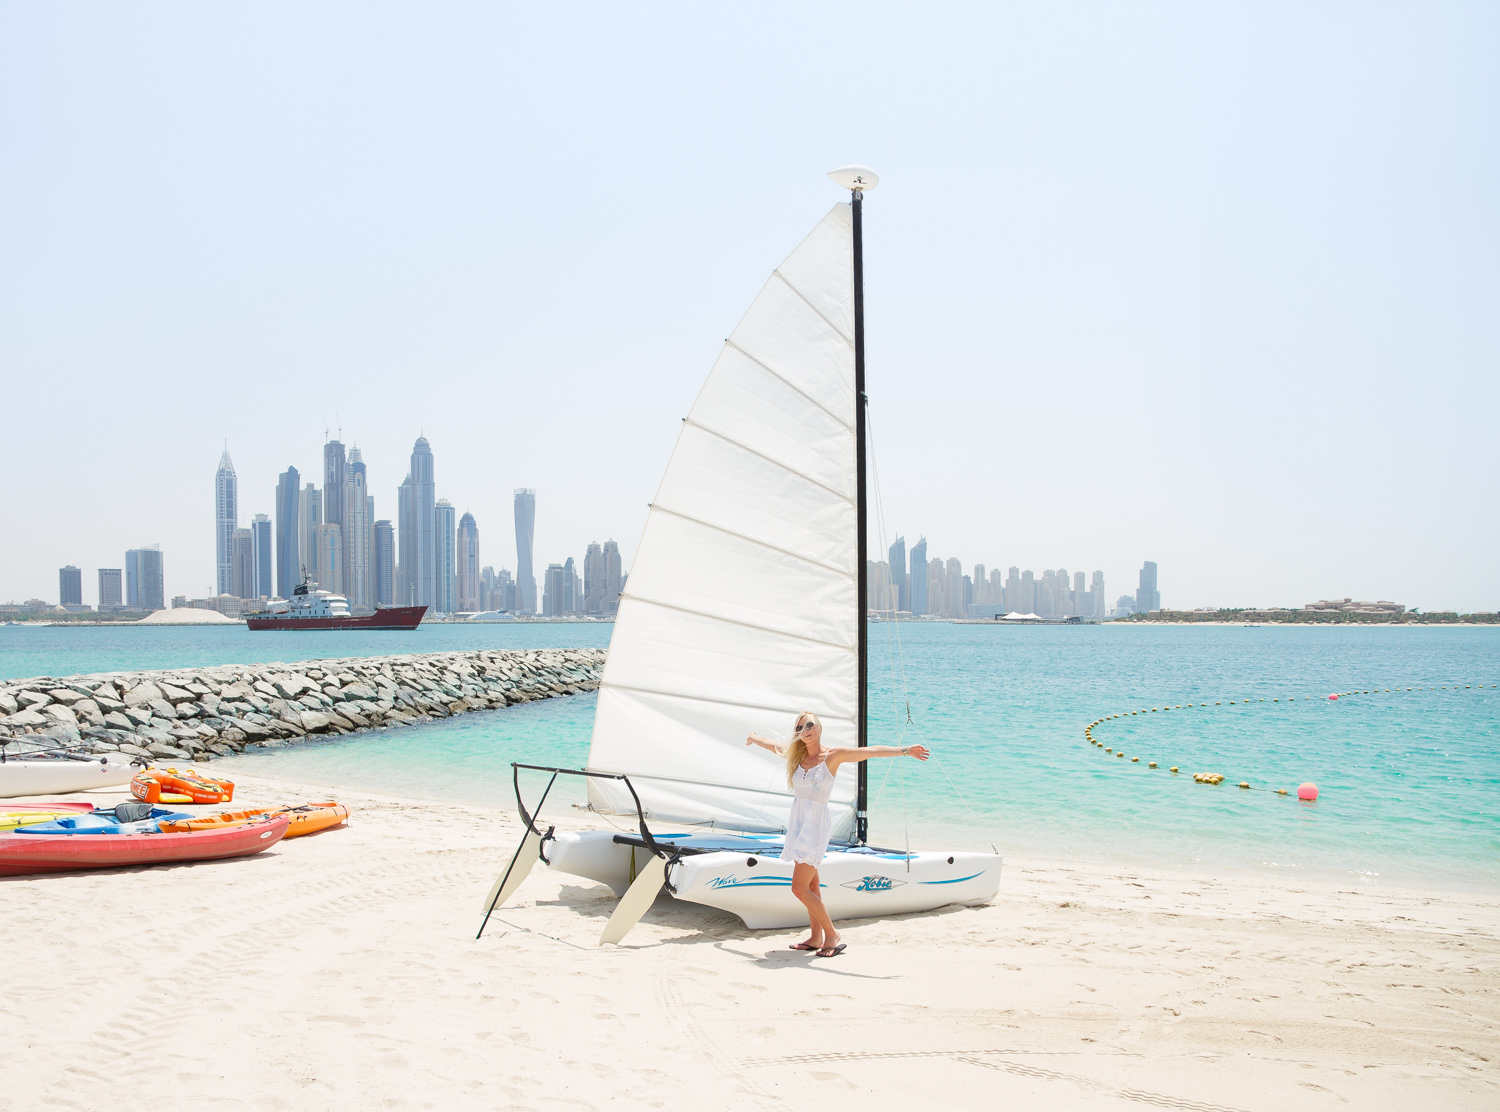 Christian-Schaffer-United-Arab-Emirates-Dubai-Beach.jpg